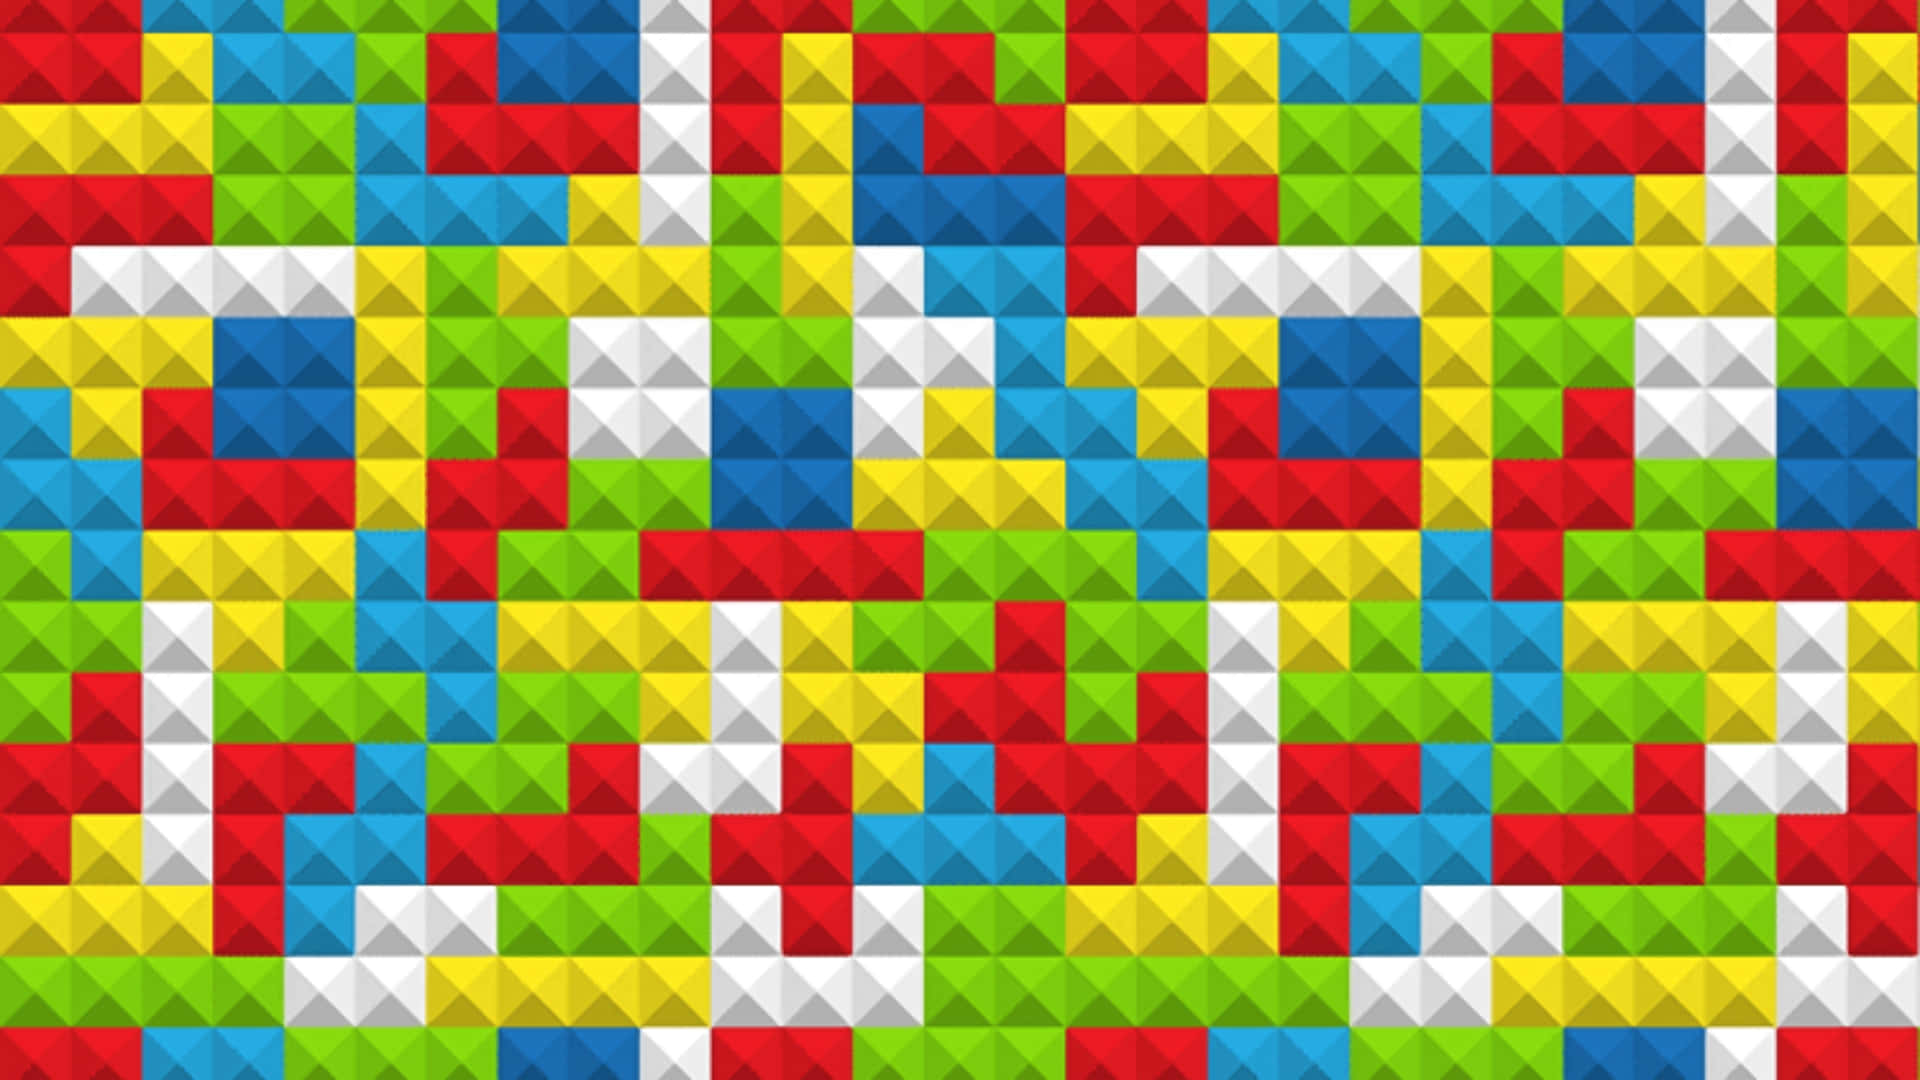 Classic Tetris Game in Vibrant Colors